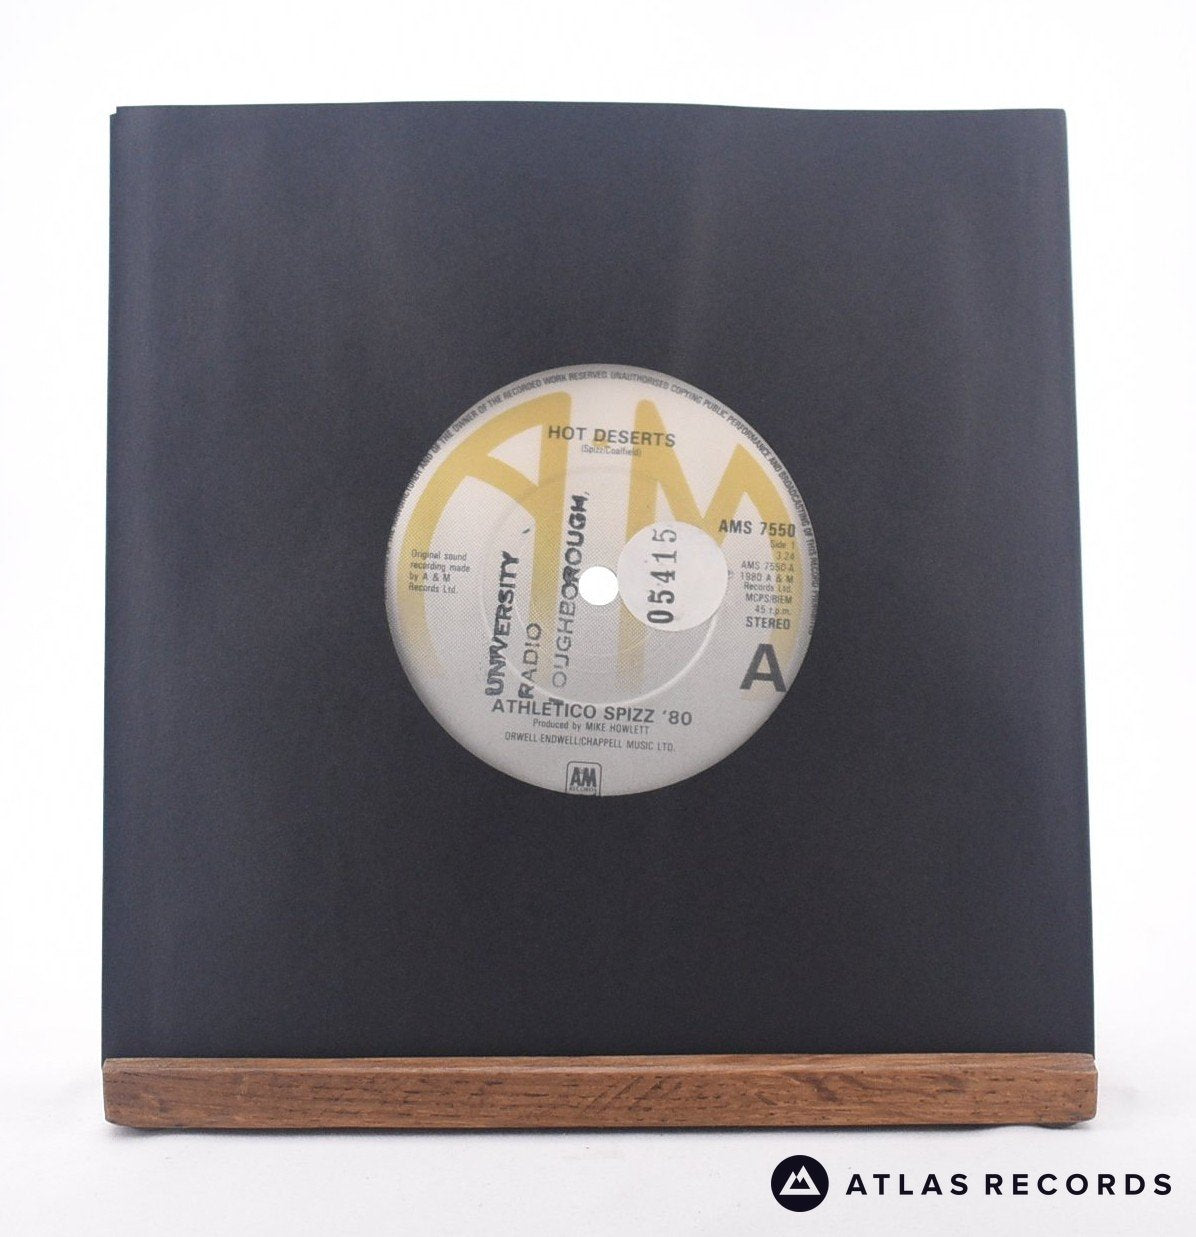 Athletico Spizz 80 Hot Deserts 7" Vinyl Record - In Sleeve